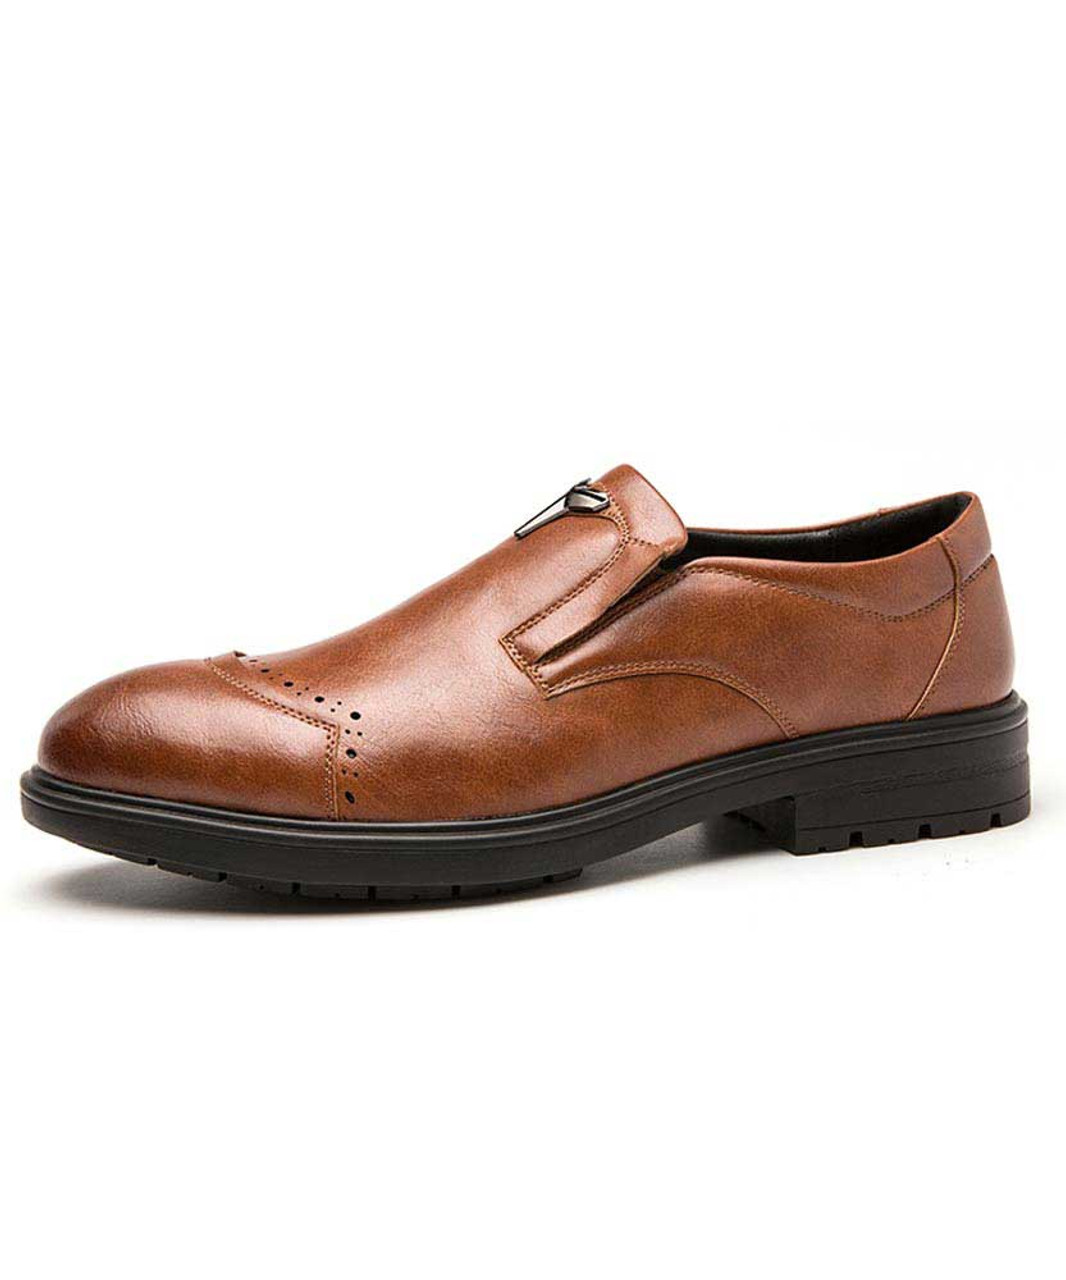 Brown metal ornament brogue slip on dress shoe | Mens dress shoes ...